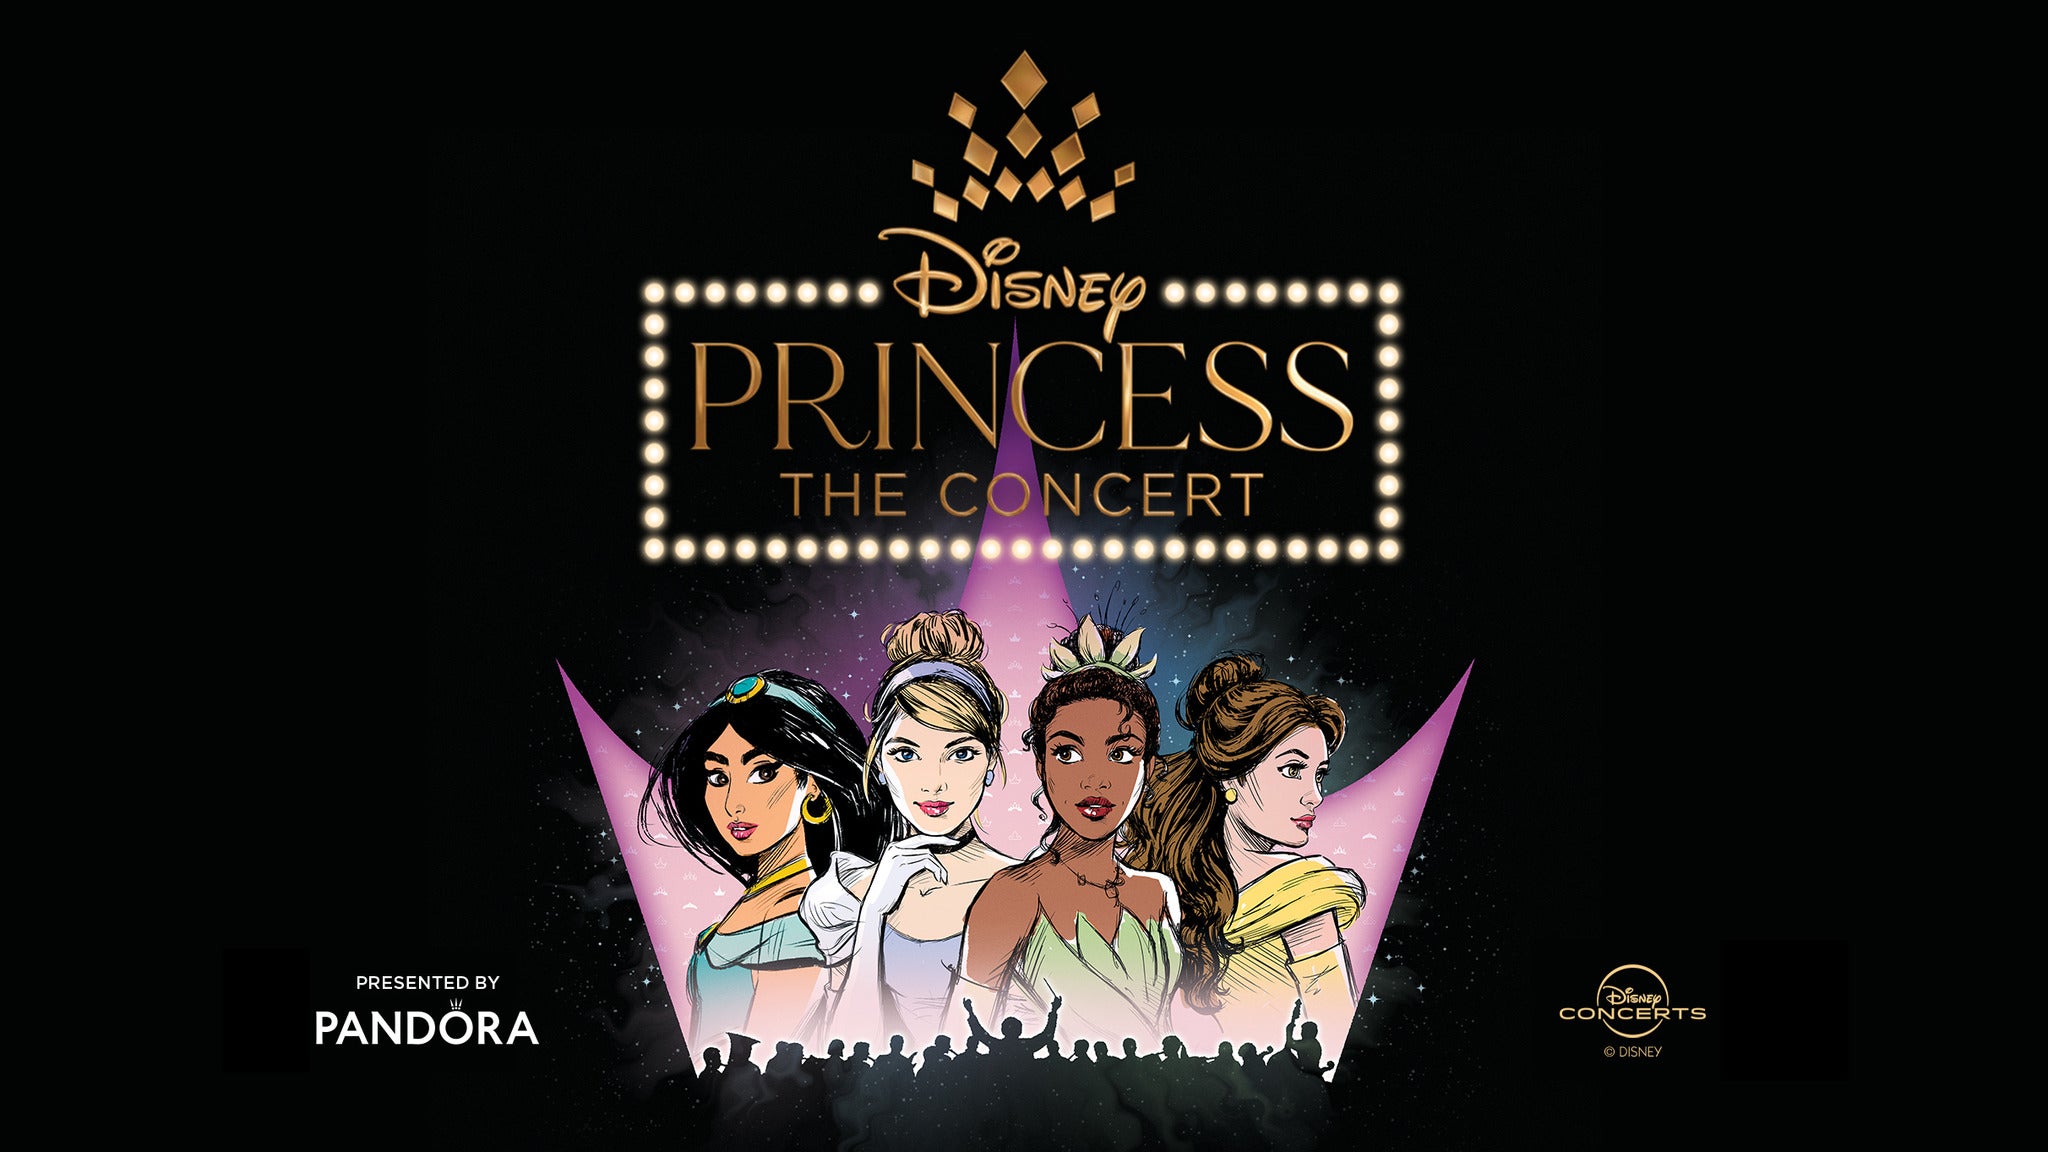 Pandora Presents: Disney Princess: The Concert